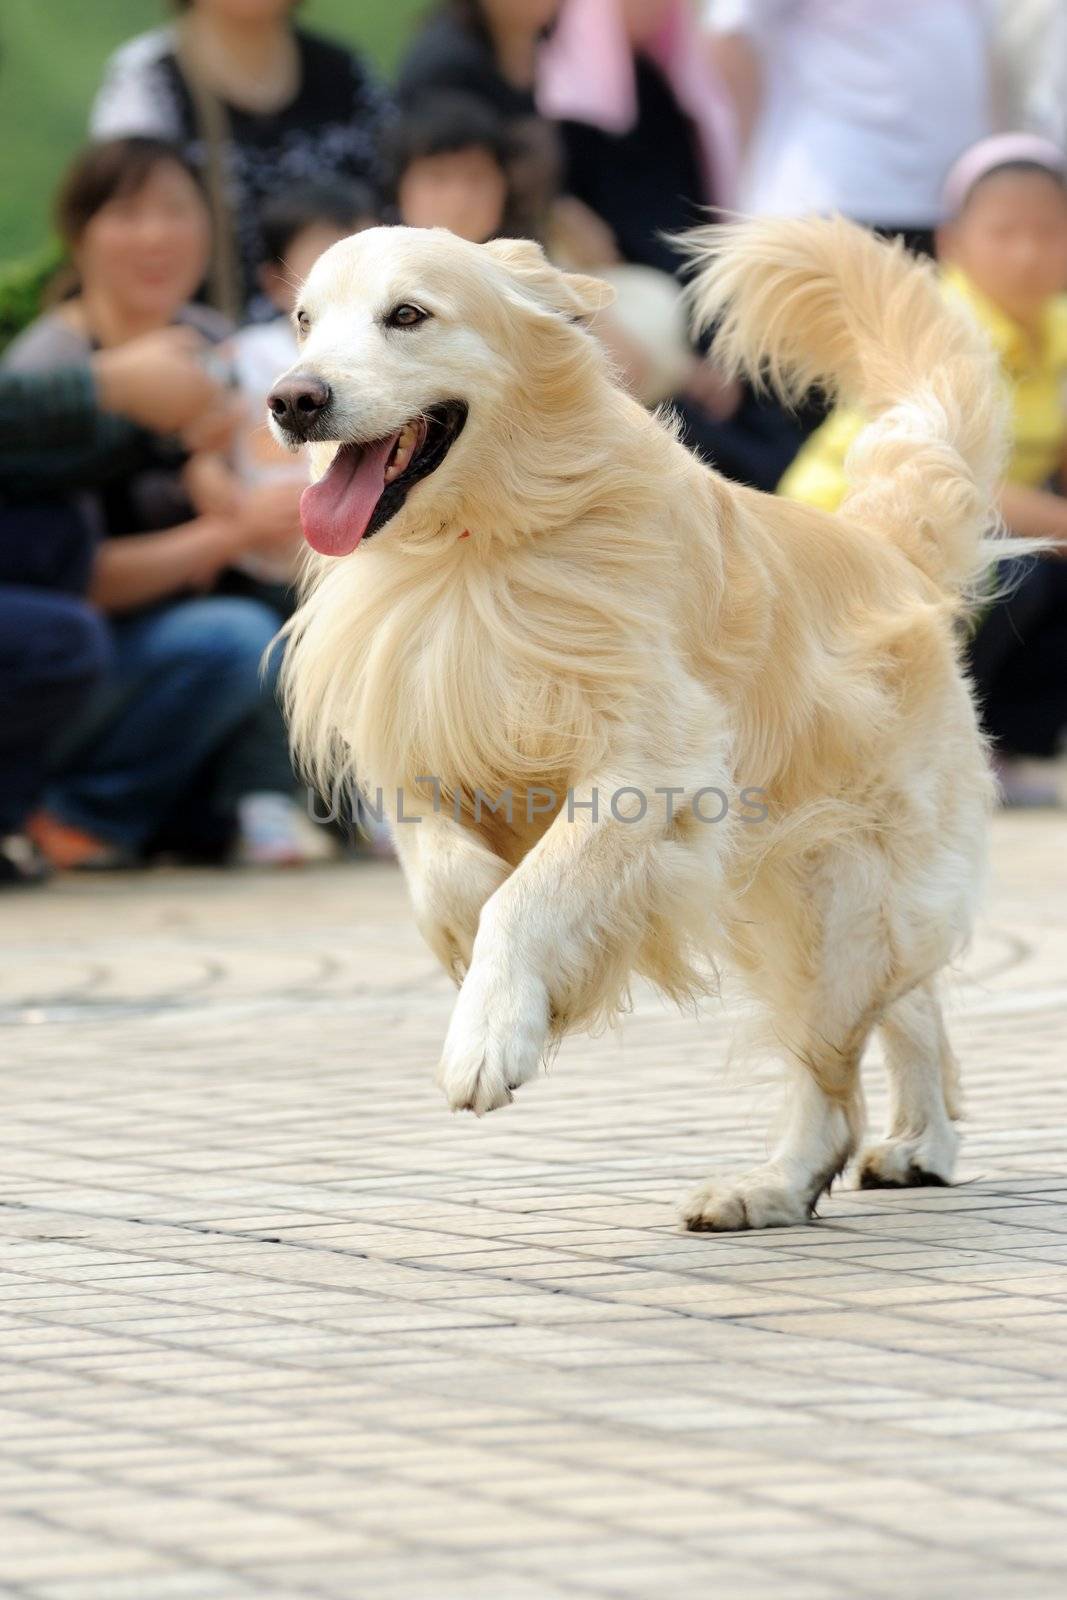 Golden retriever dog running on the ground